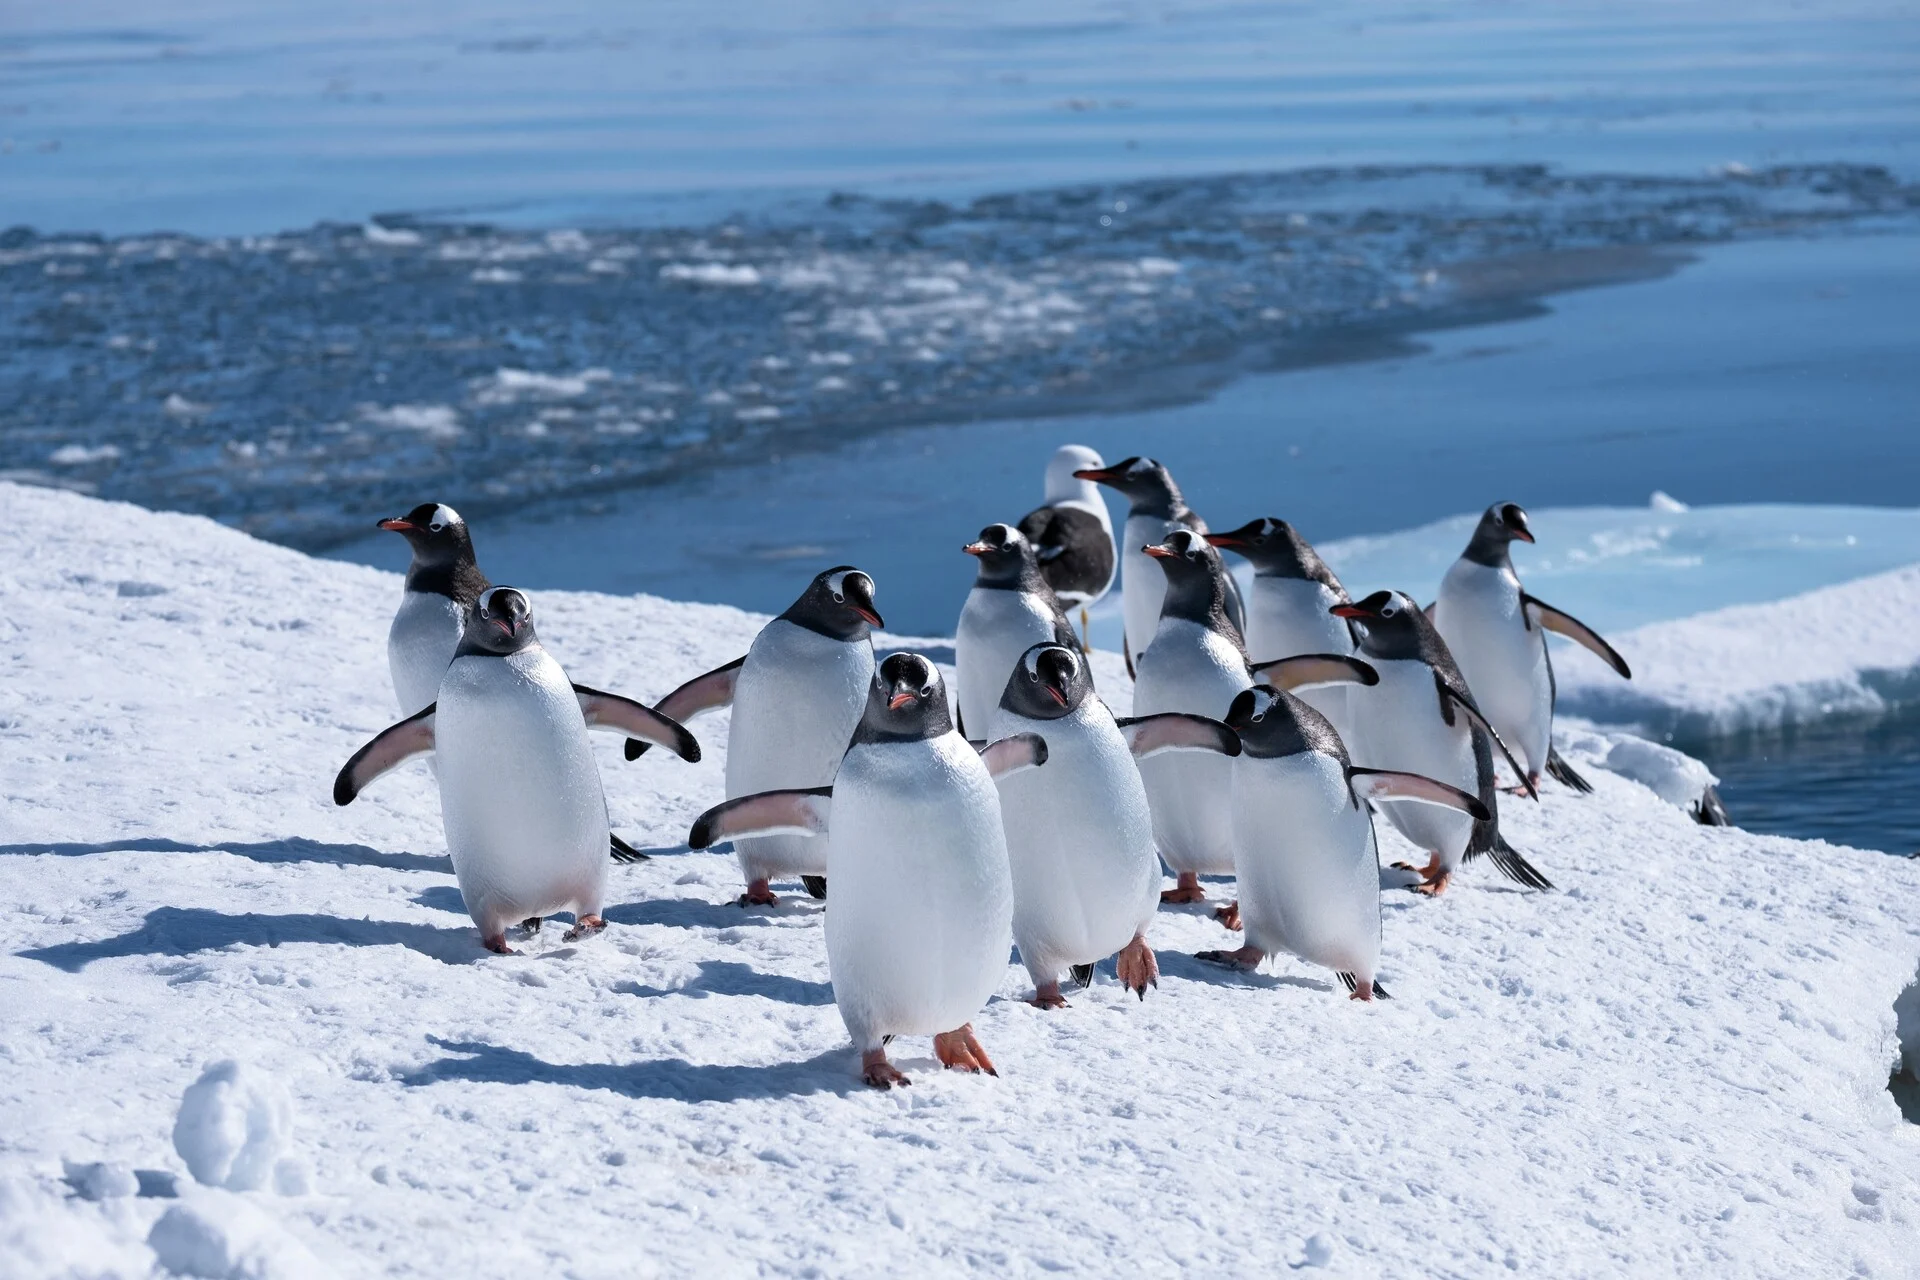 Penguins-Galindez-Island-Antarctica-Photo-Ingemund_Skålnes.jpg